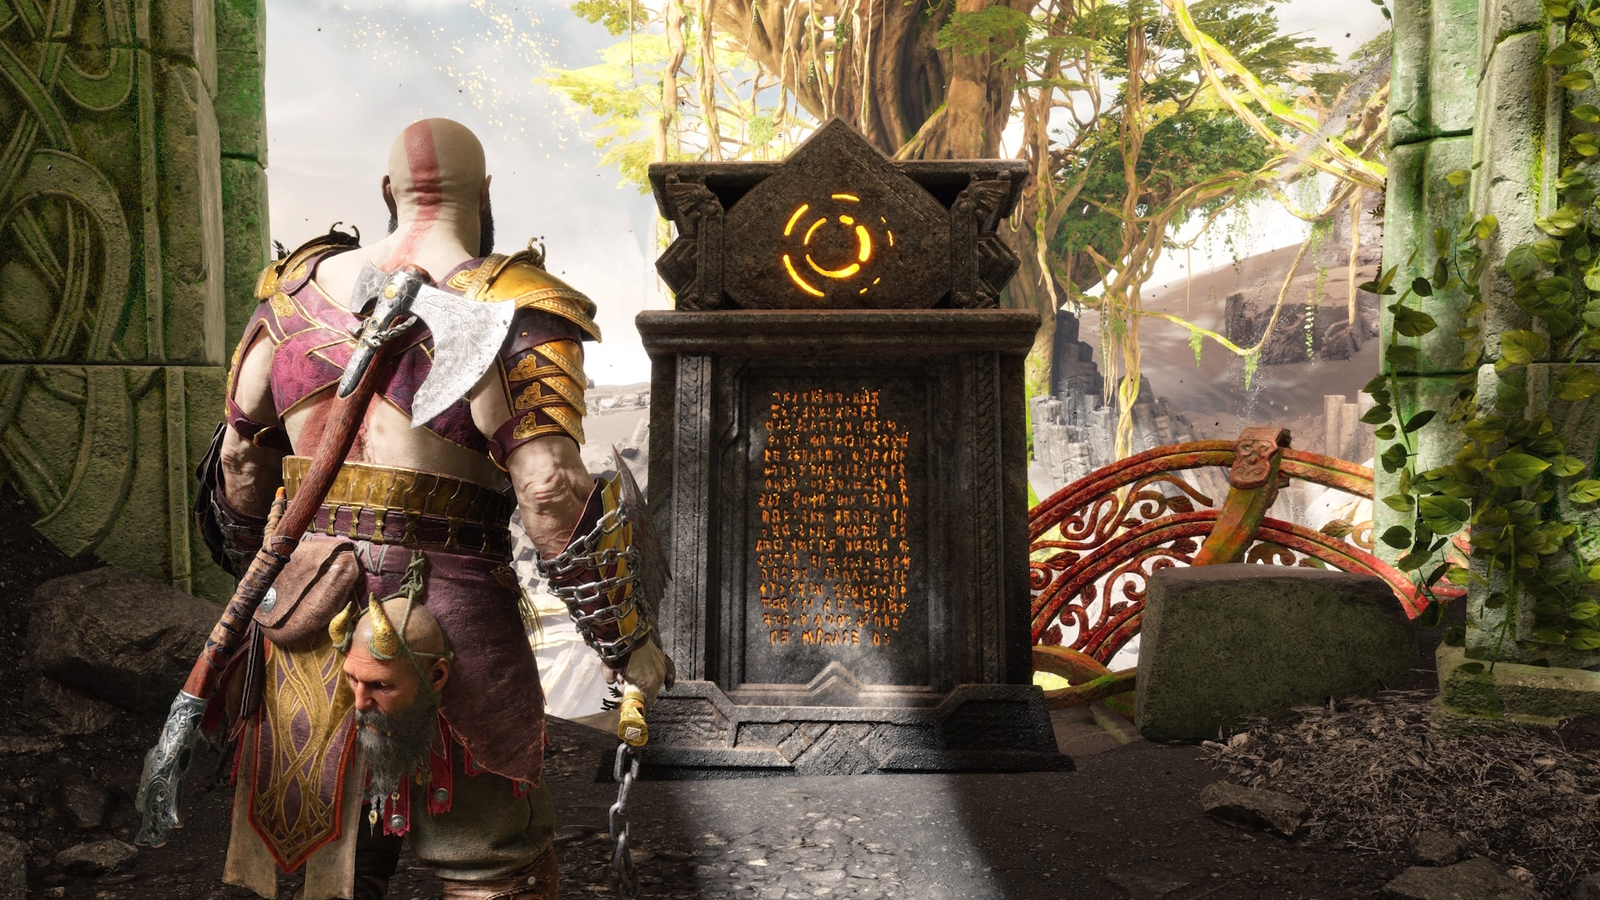 God of War Ragnarok: Valhalla Roguelike DLC Launching for Free Next Week